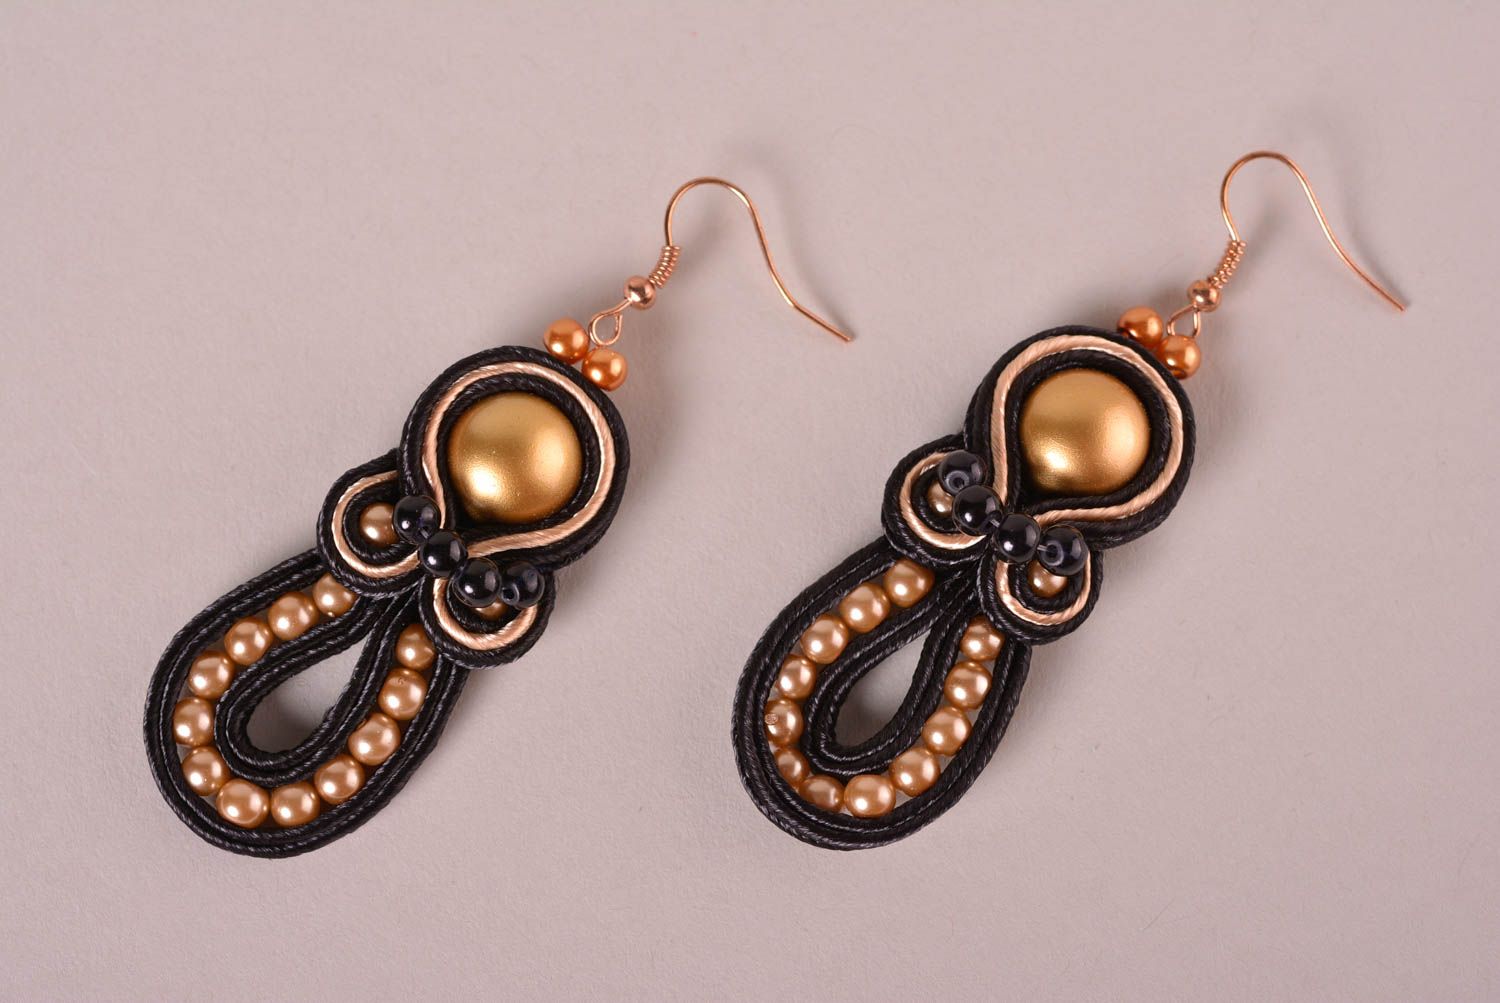 Handmade fashion jewelry soutache earrings unusual big earrings for women photo 1